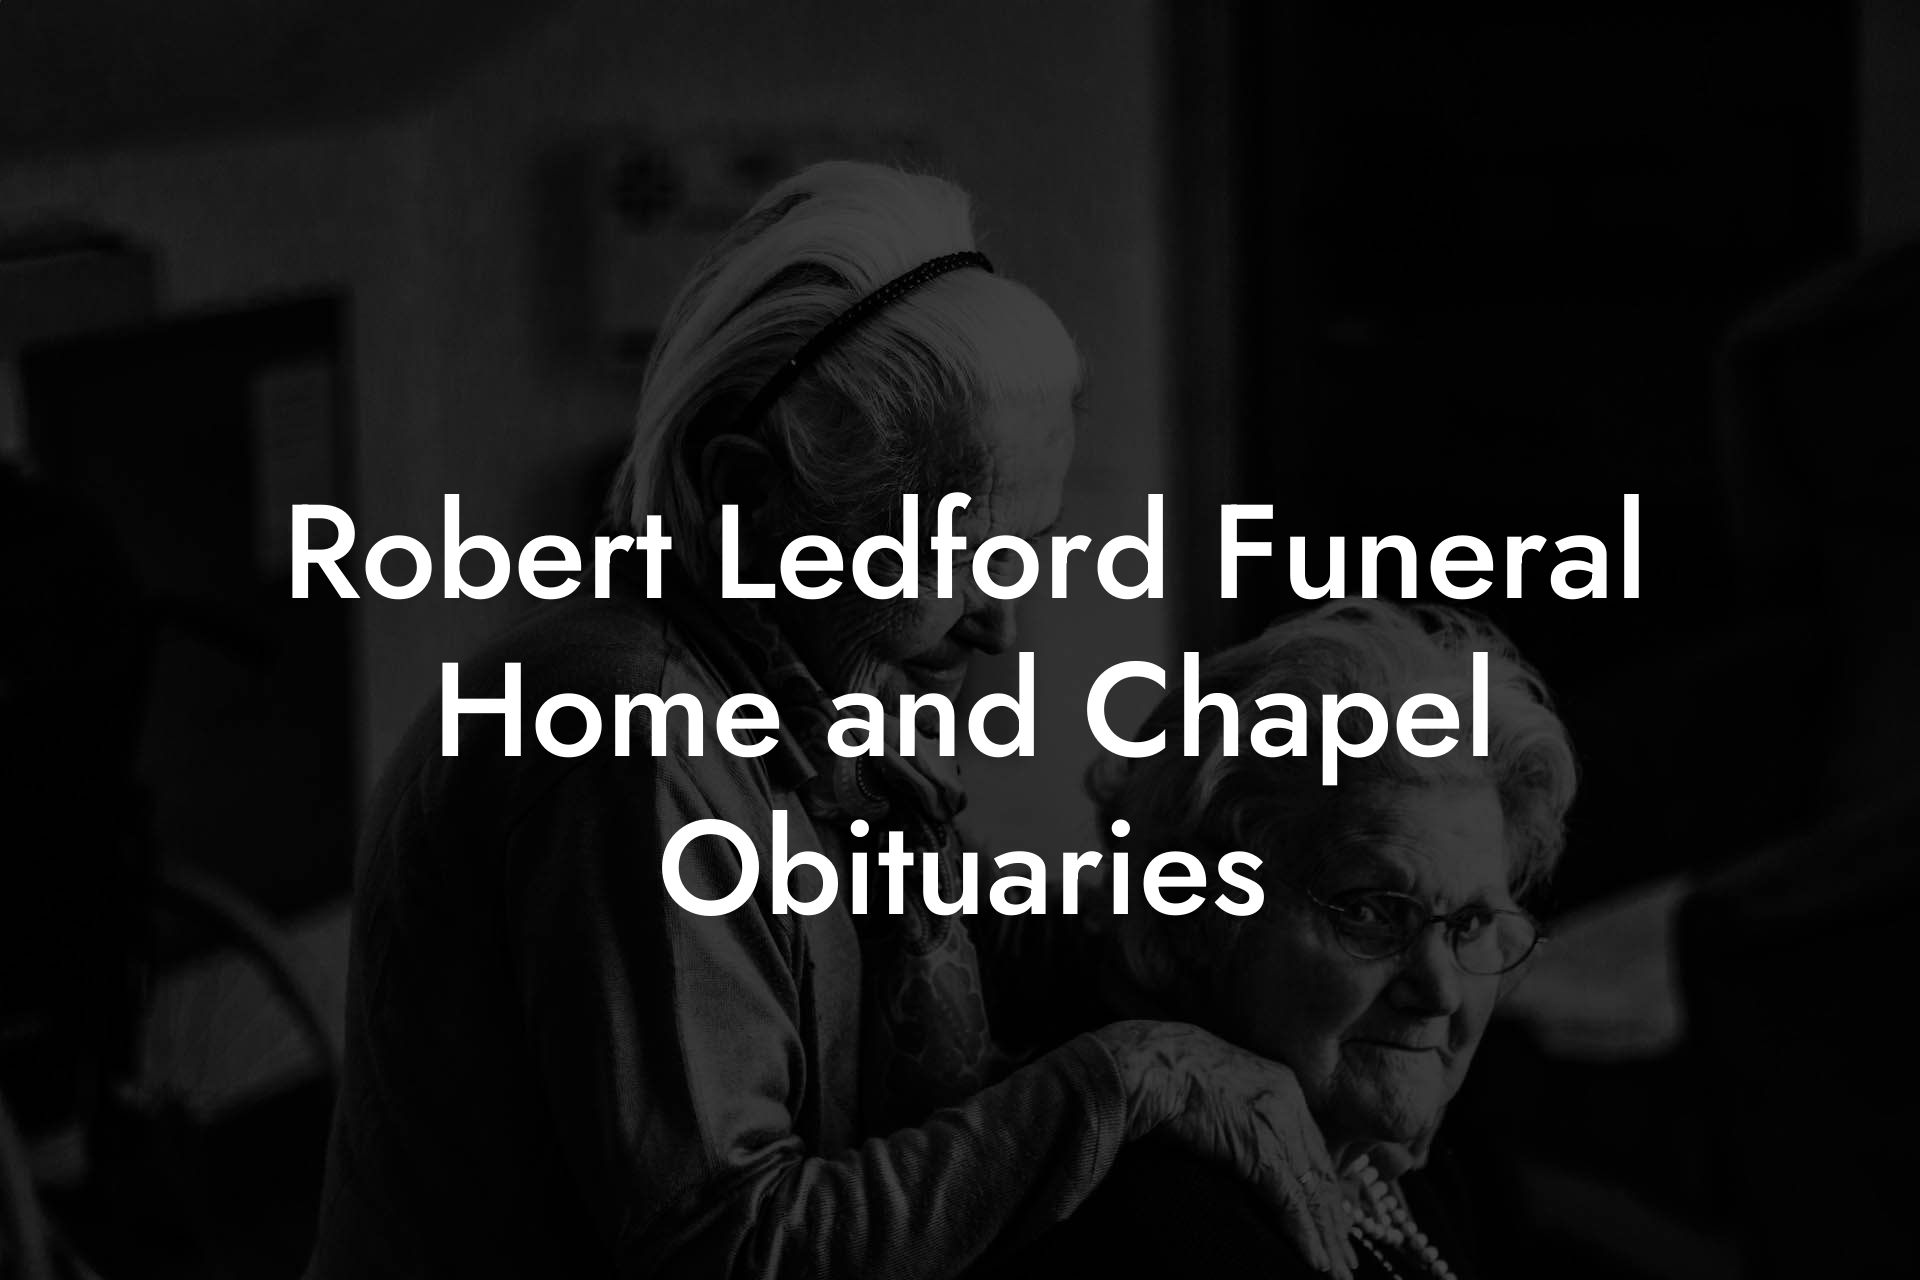 Robert Ledford Funeral Home and Chapel Obituaries